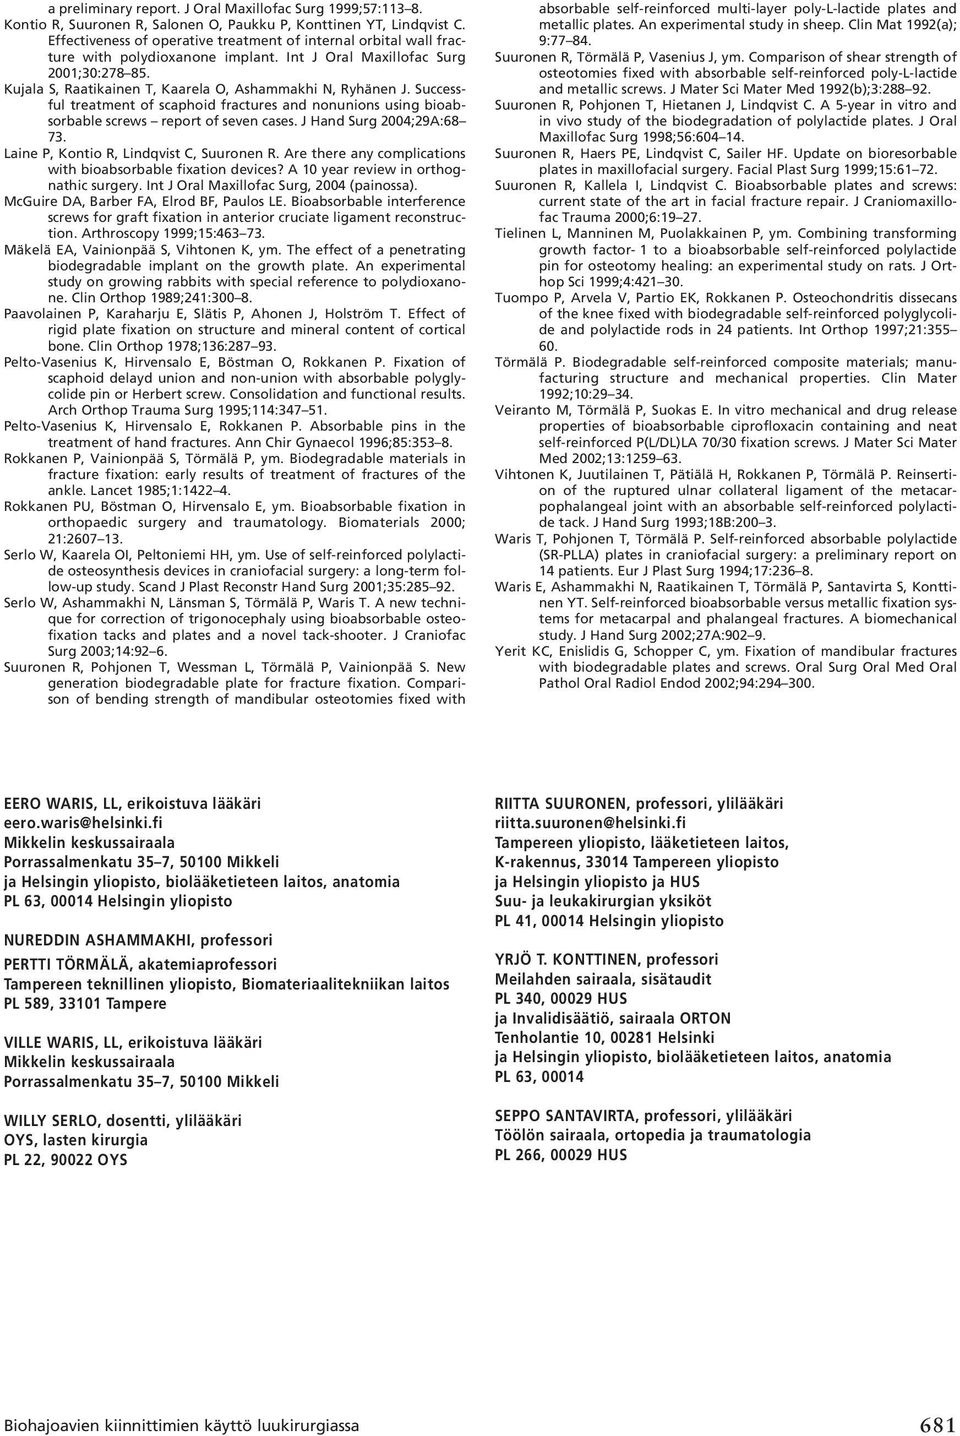 Kujala S, Raatikainen T, Kaarela O, Ashammakhi N, Ryhänen J. Successful treatment of scaphoid fractures and nonunions using bioabsorbable screws report of seven cases. J Hand Surg 2004;29A:68 73.